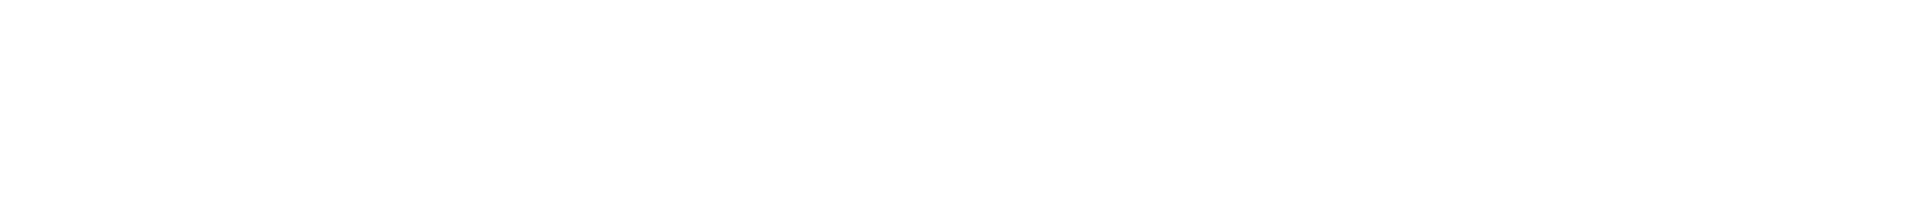 Law Offices of William Woodson & Kurt Goodwin - Logo